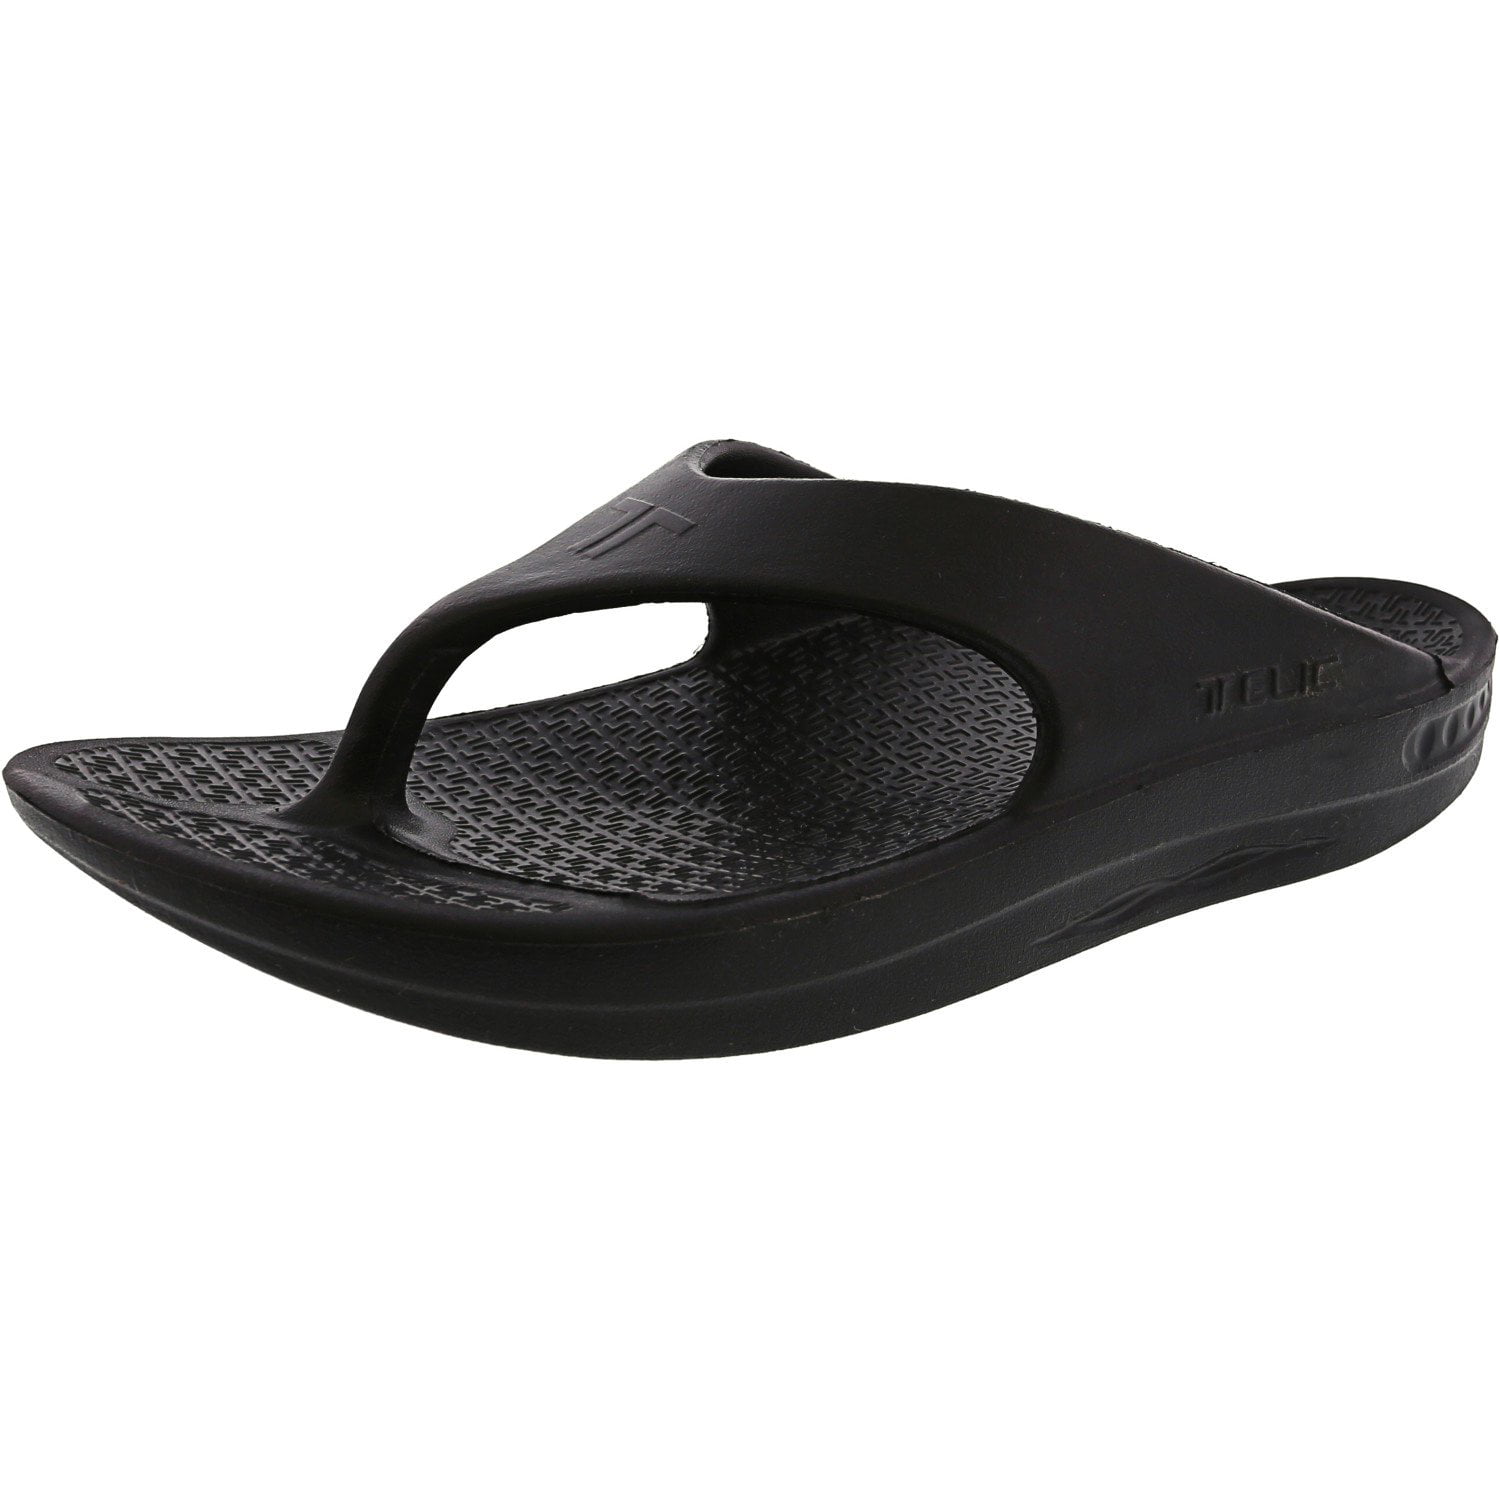 Telic - Telic Flip Flop Black Slip-On Shoes - 11M / 10M - Walmart.com ...